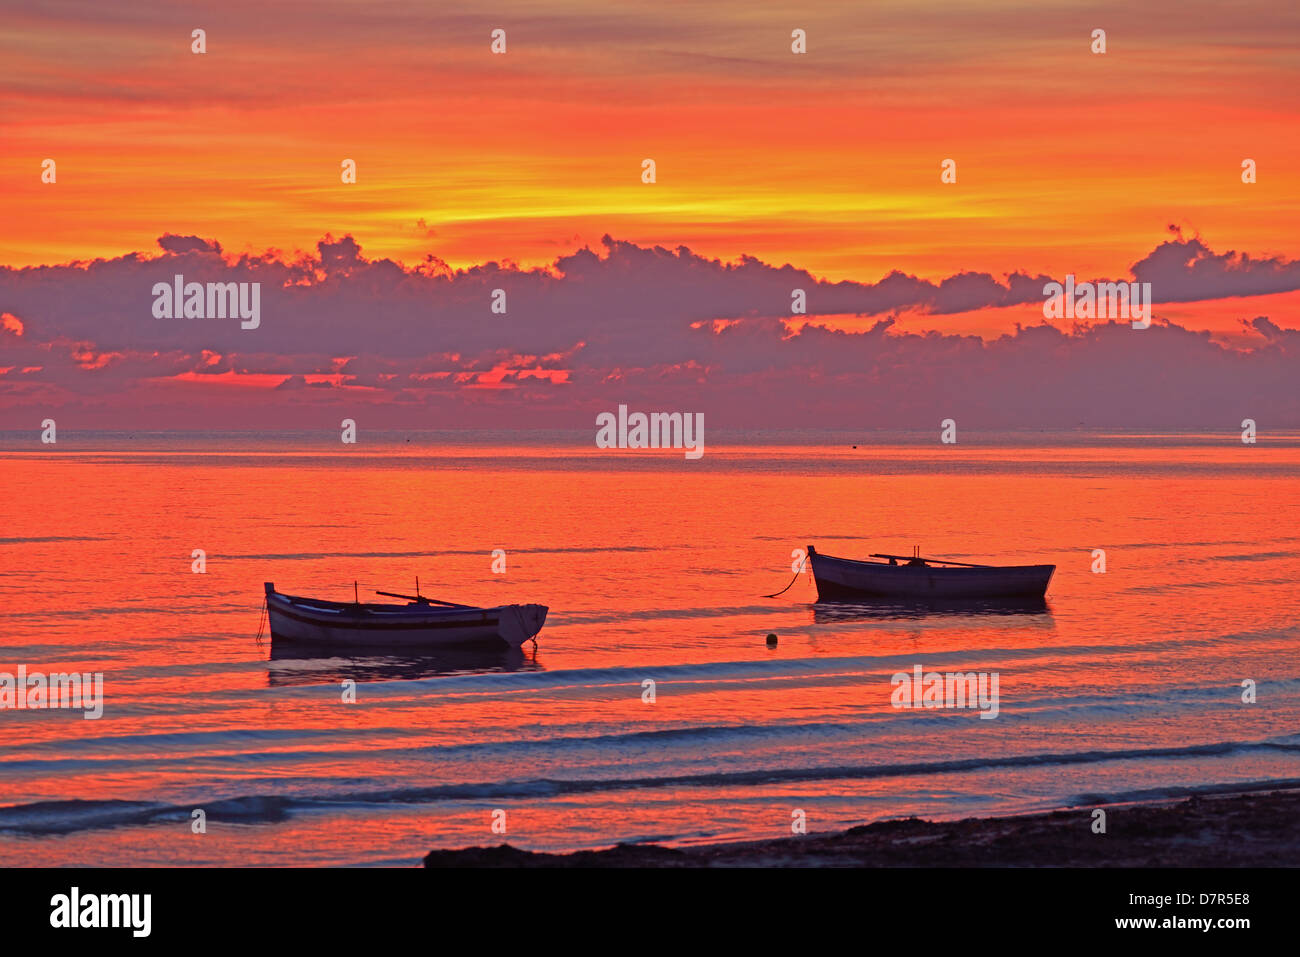 Boats at sunrise, Mediterranean, Zarzis, Tunisia. Stock Photo